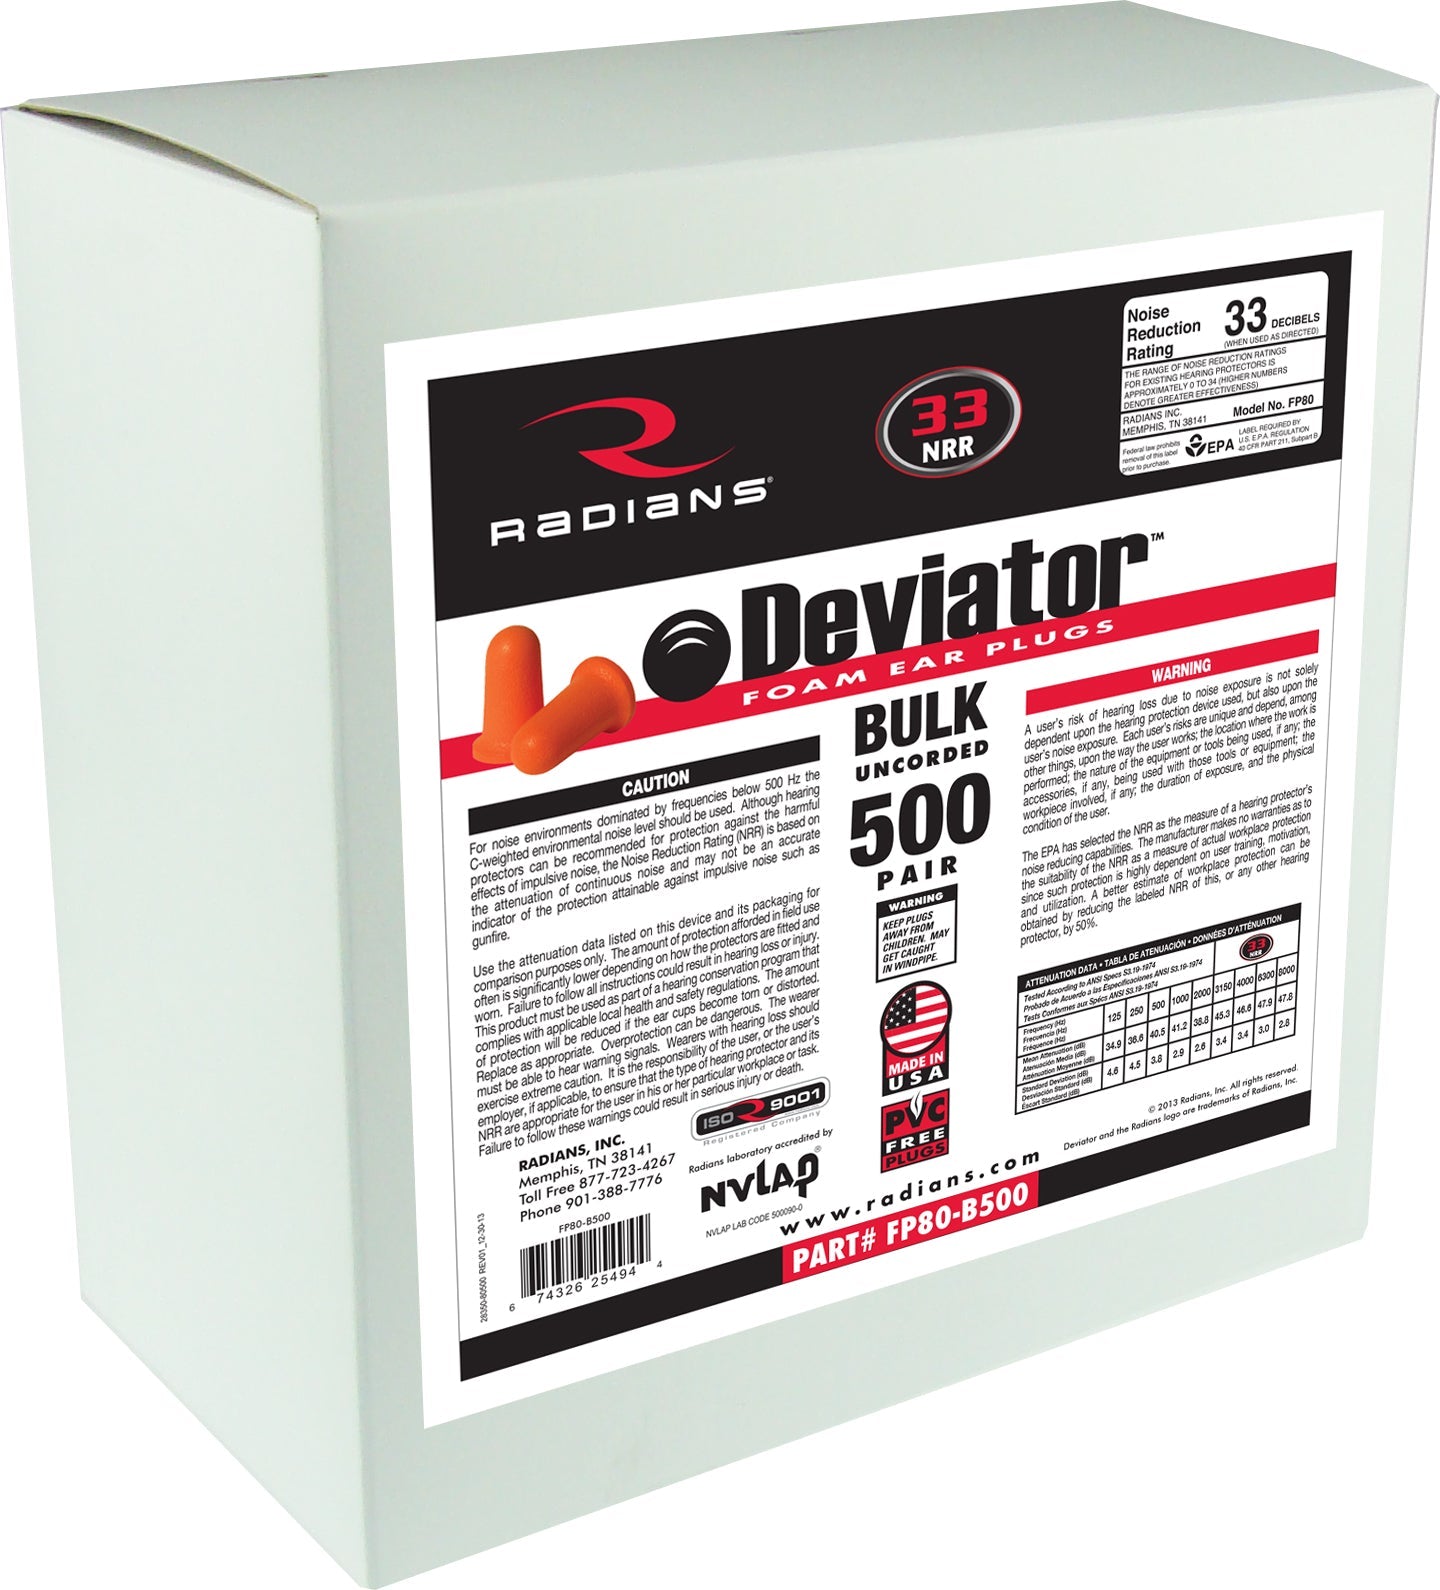 Radians Deviator® Foam Uncorded Earplug Dispenser Refill - 500 Pair